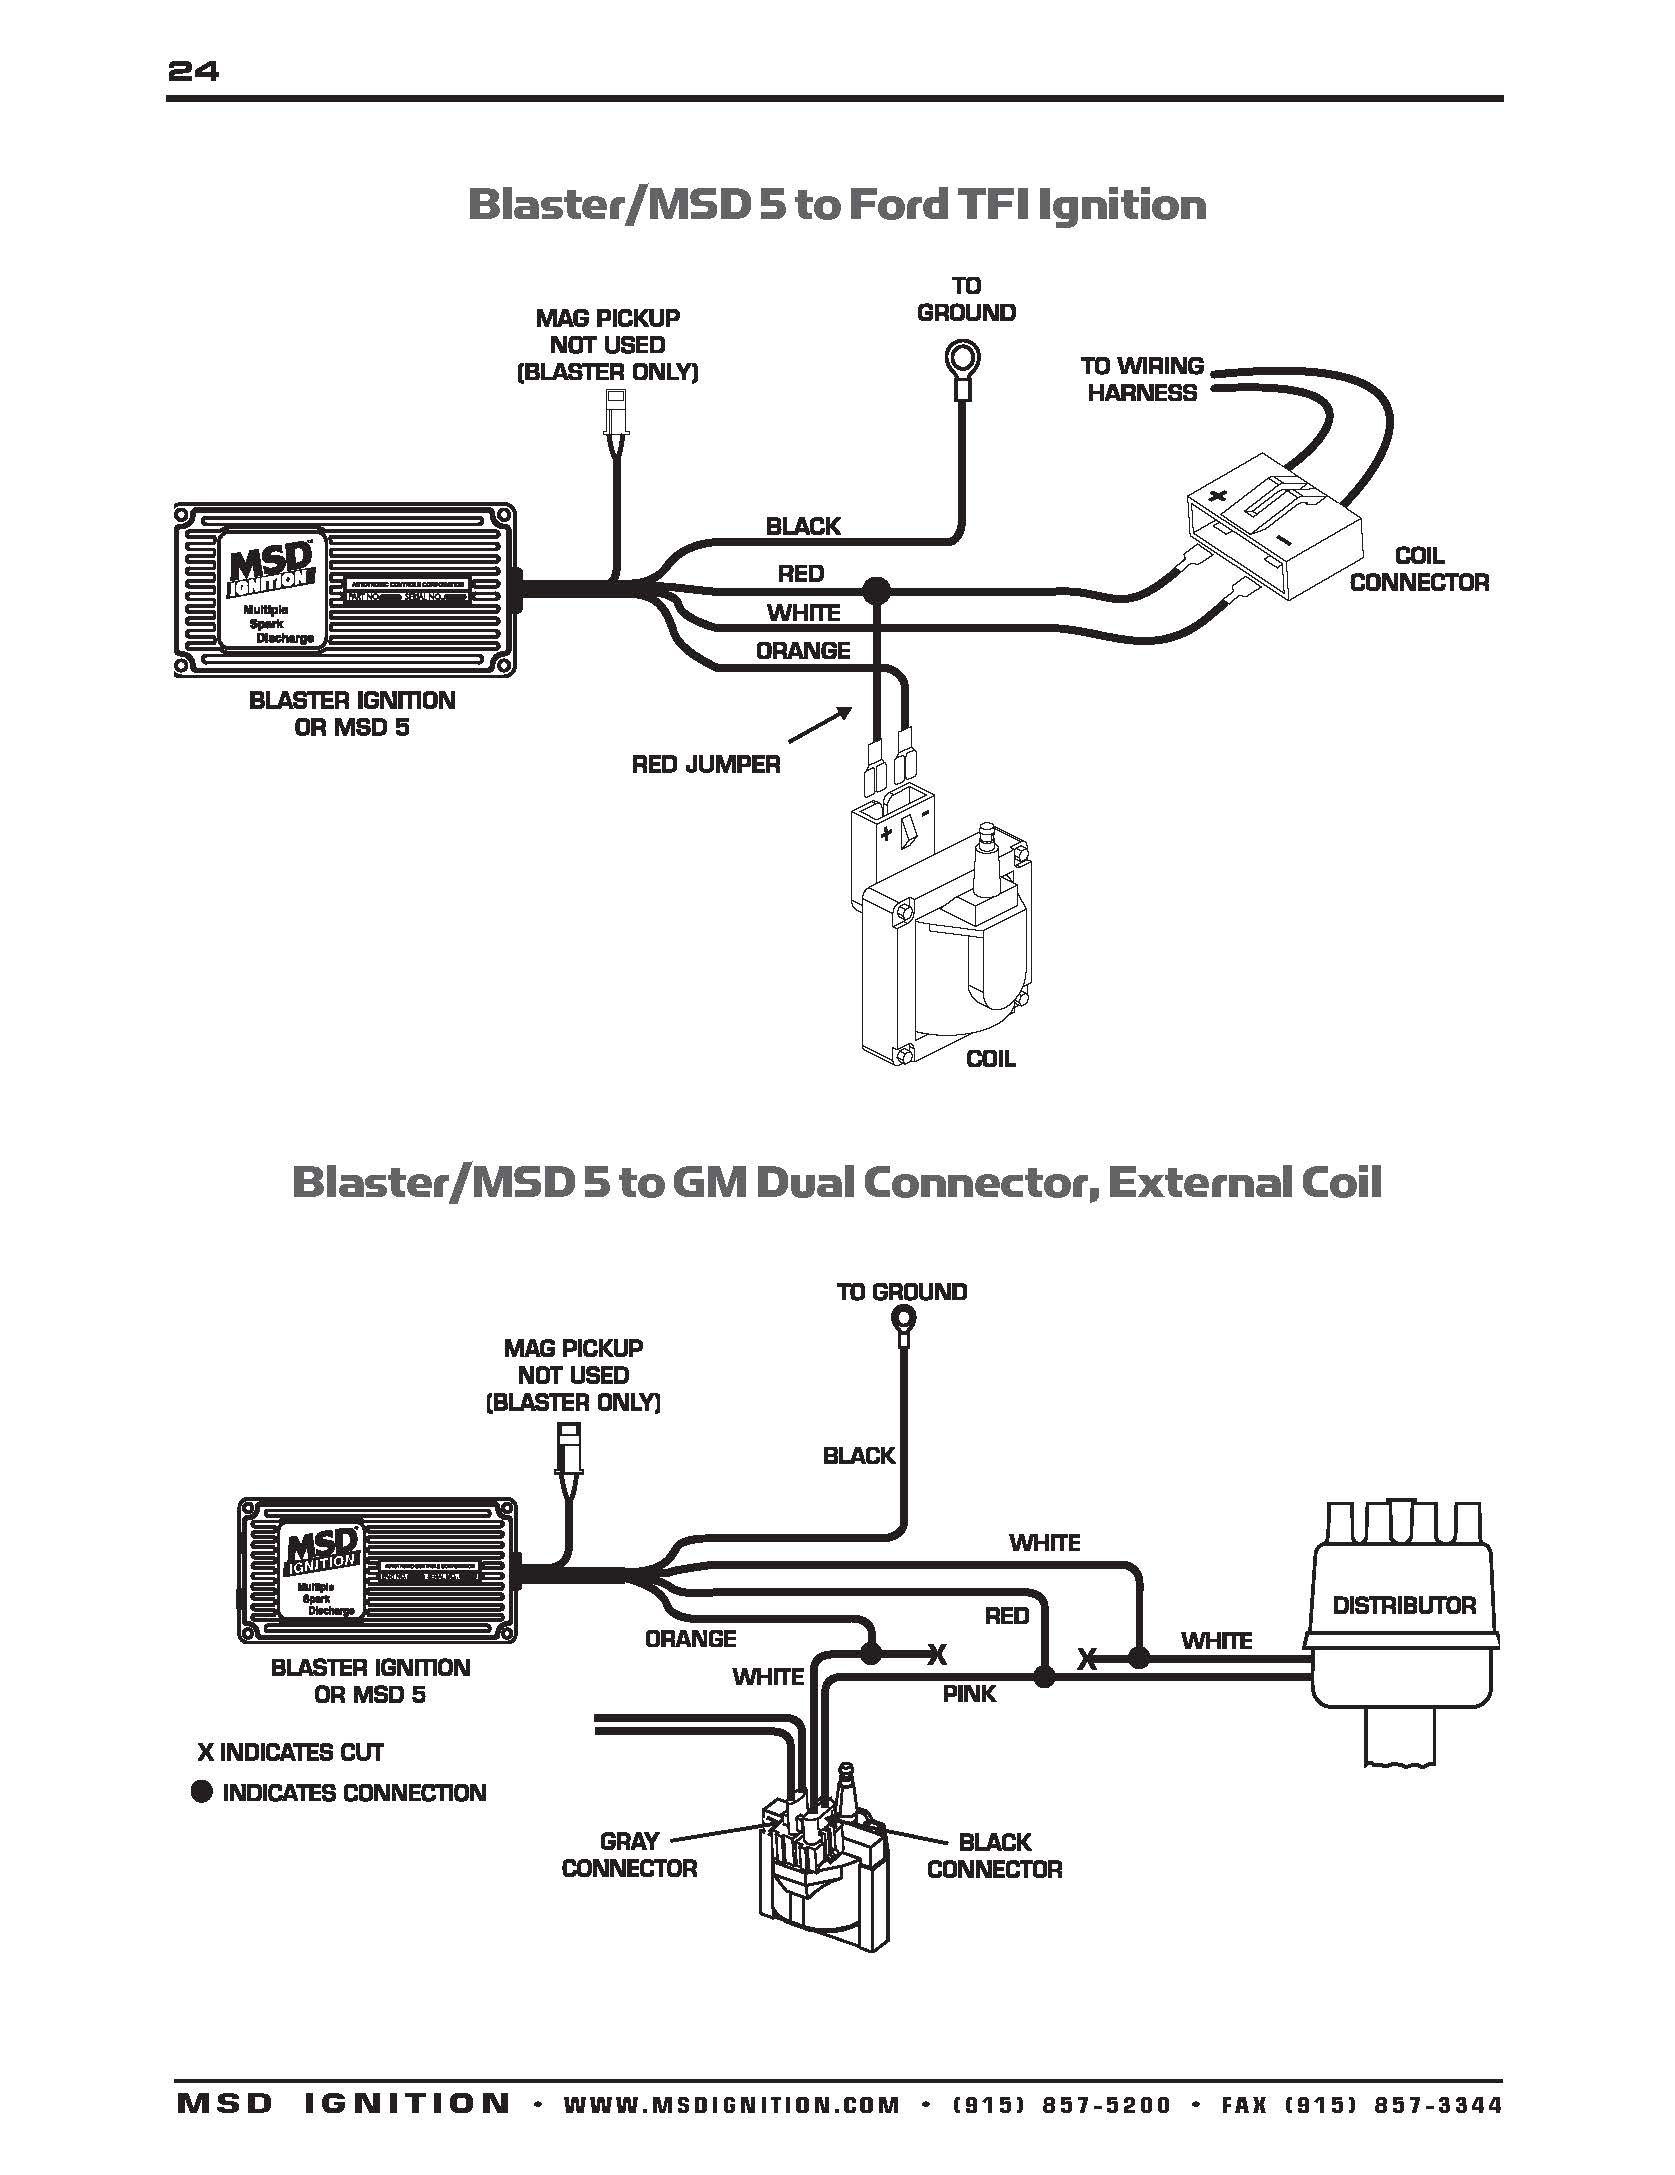 Chevy Hei Wiring 2Wire System - Wiring Diagram Data - Chevy Hei Distributor Wiring Diagram